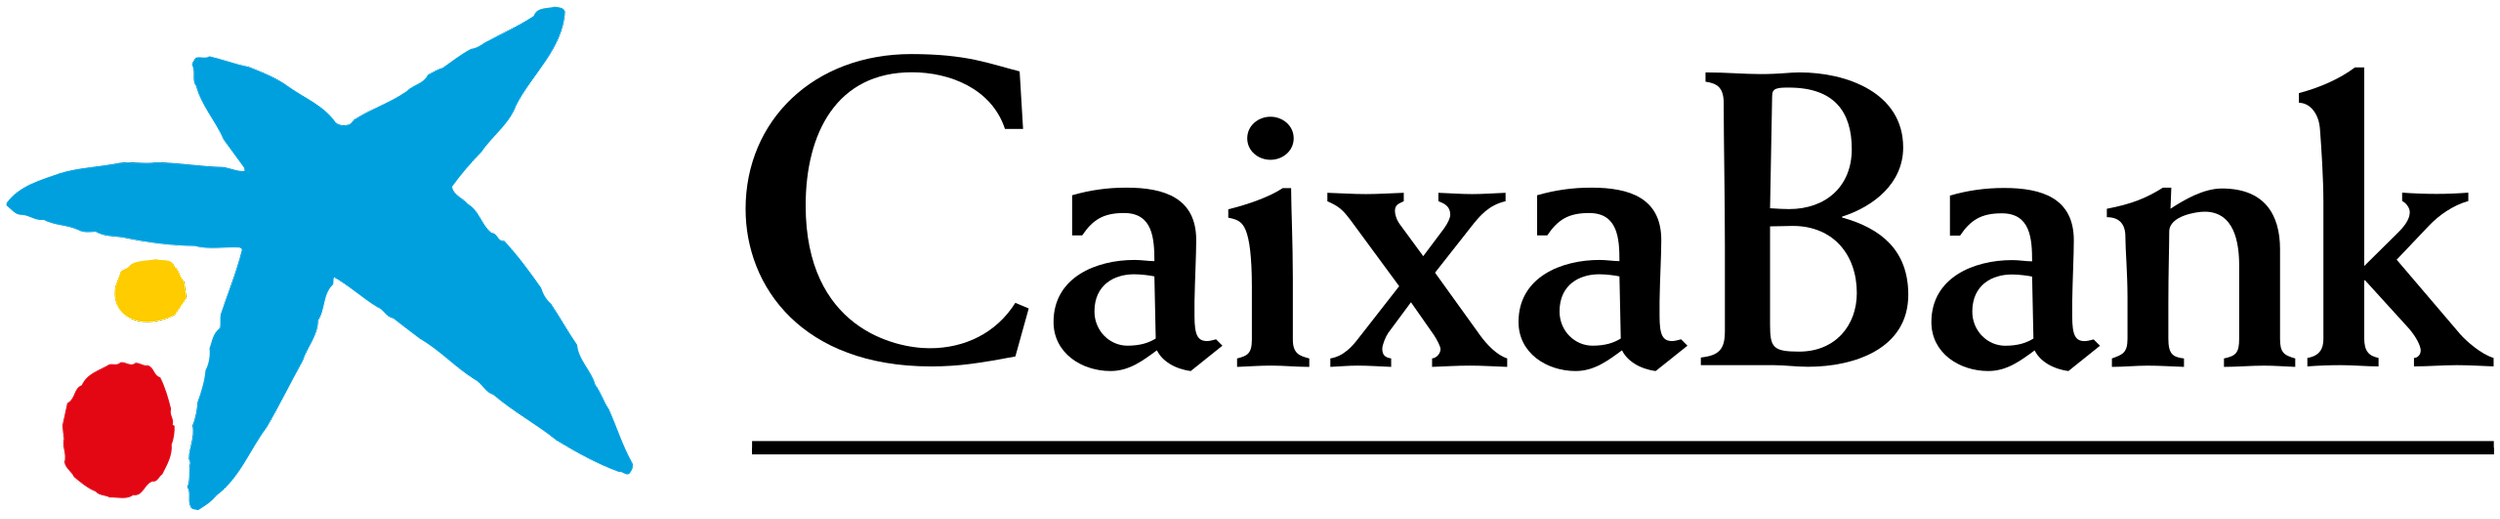 2560px-Logo_CaixaBank.svg.png